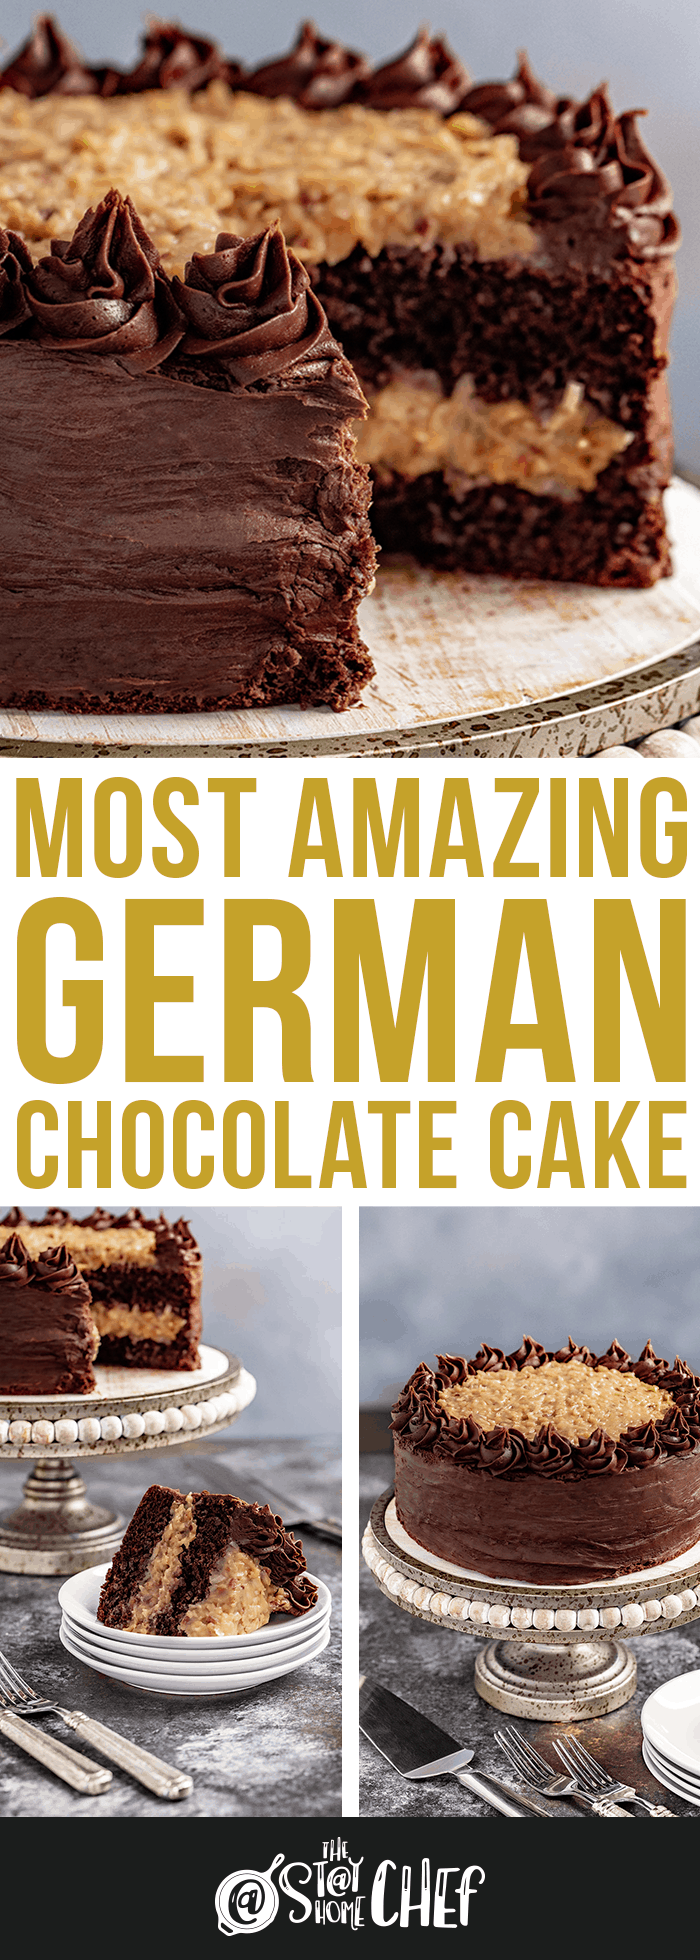 The Most Amazing German Chocolate Cake